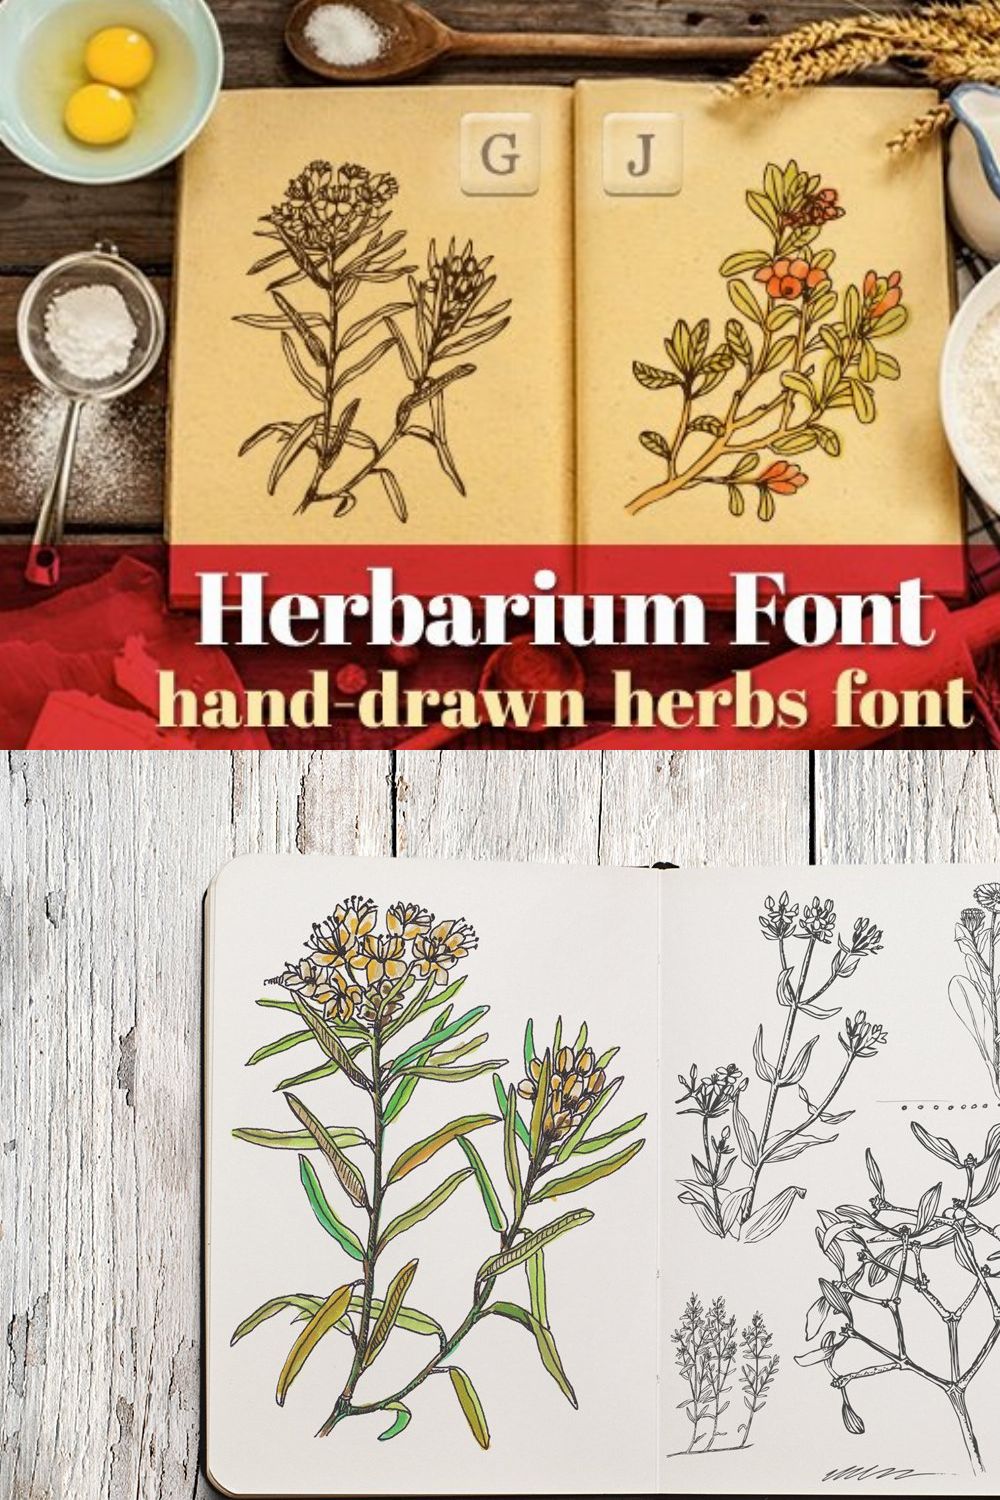 Herbarium Font pinterest preview image.